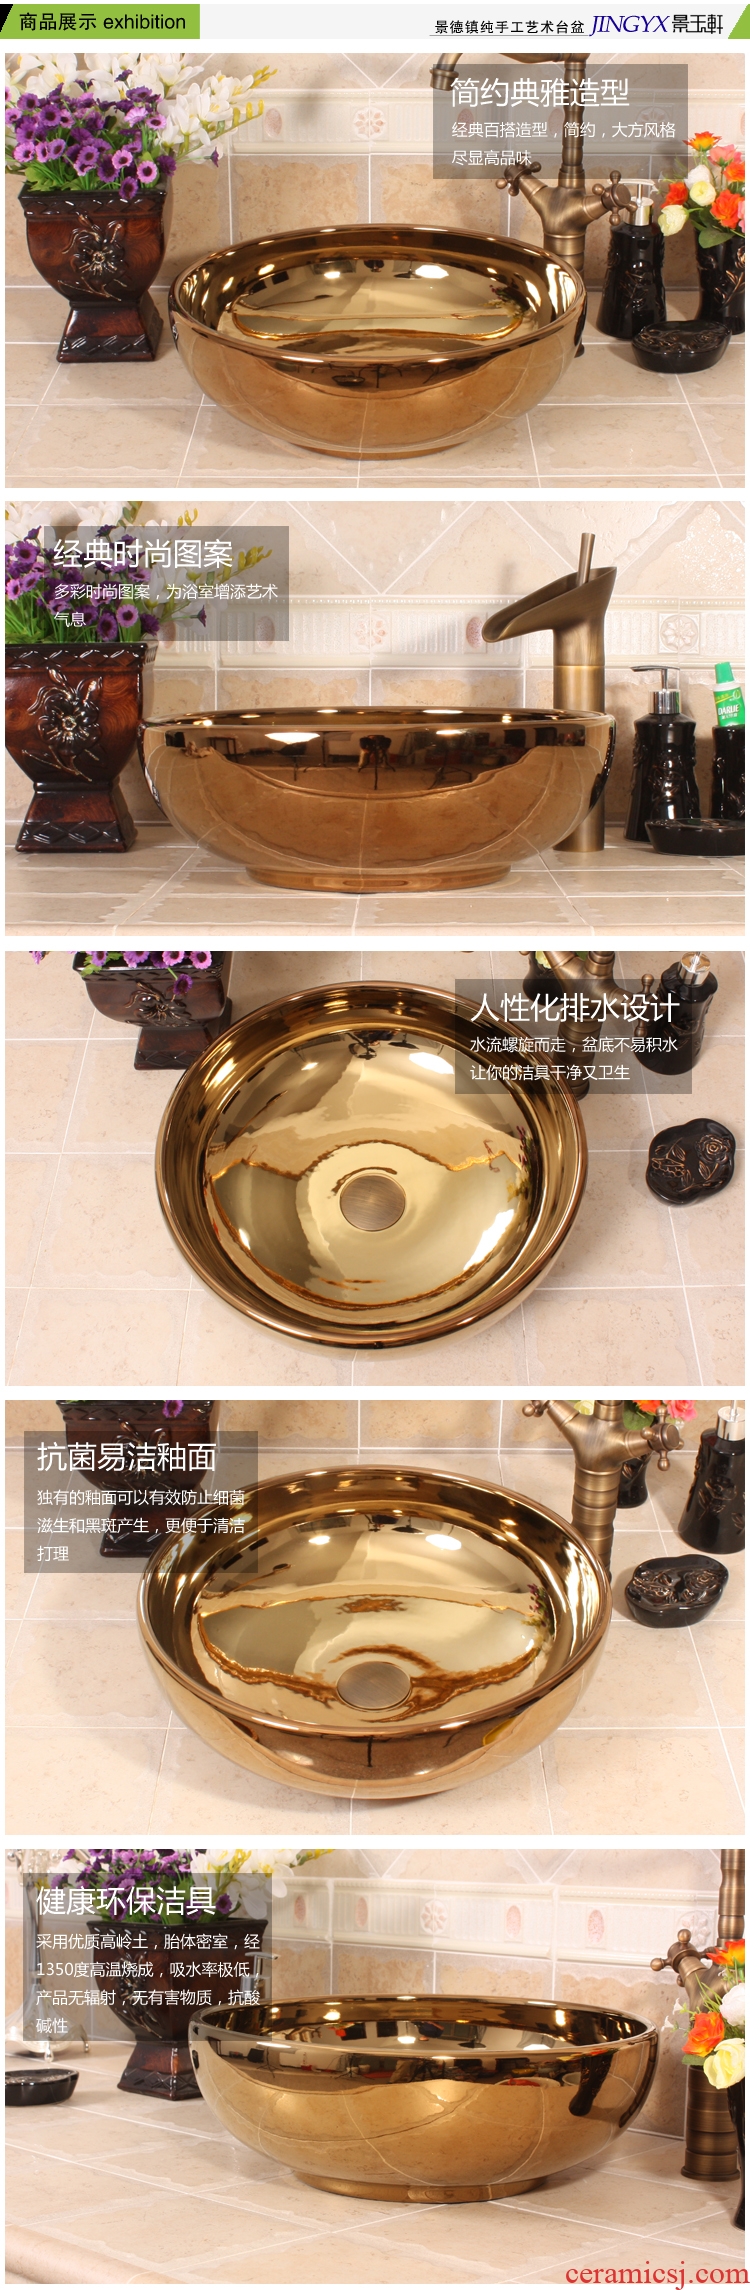 Gold - plated smooth sanitary ware jingdezhen ceramics art basin stage basin sinks